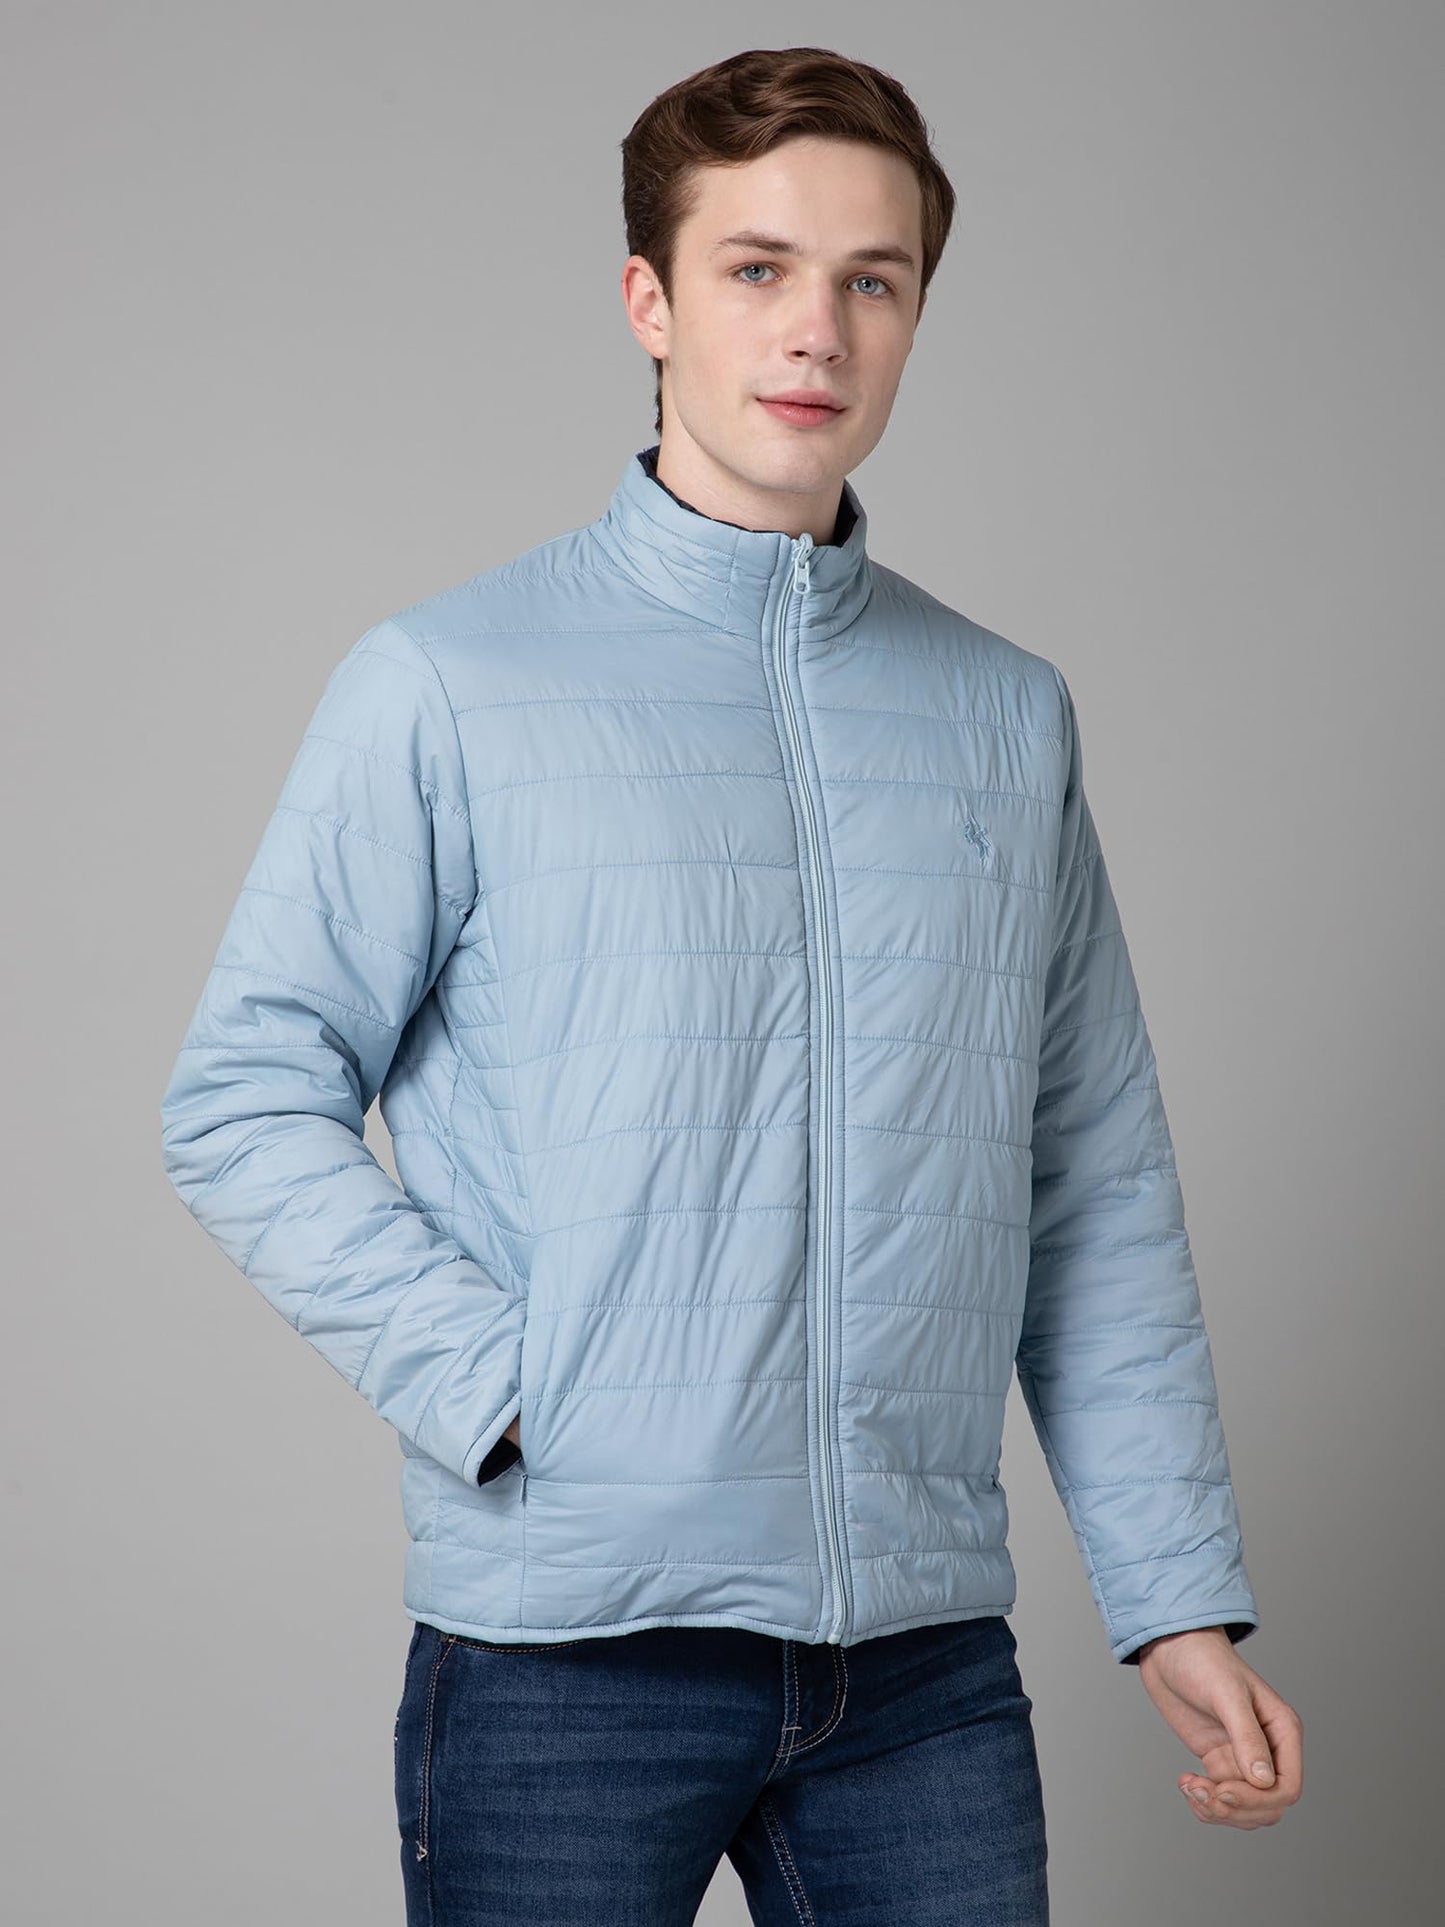 Cantabil Solid Reversible Full Sleeves Mock collar Regular Fit Mens Casual Jacket | Casual Winter Jackets for Men | Mens Jackets for Winter Wear (MJKT00148_SKY_M)